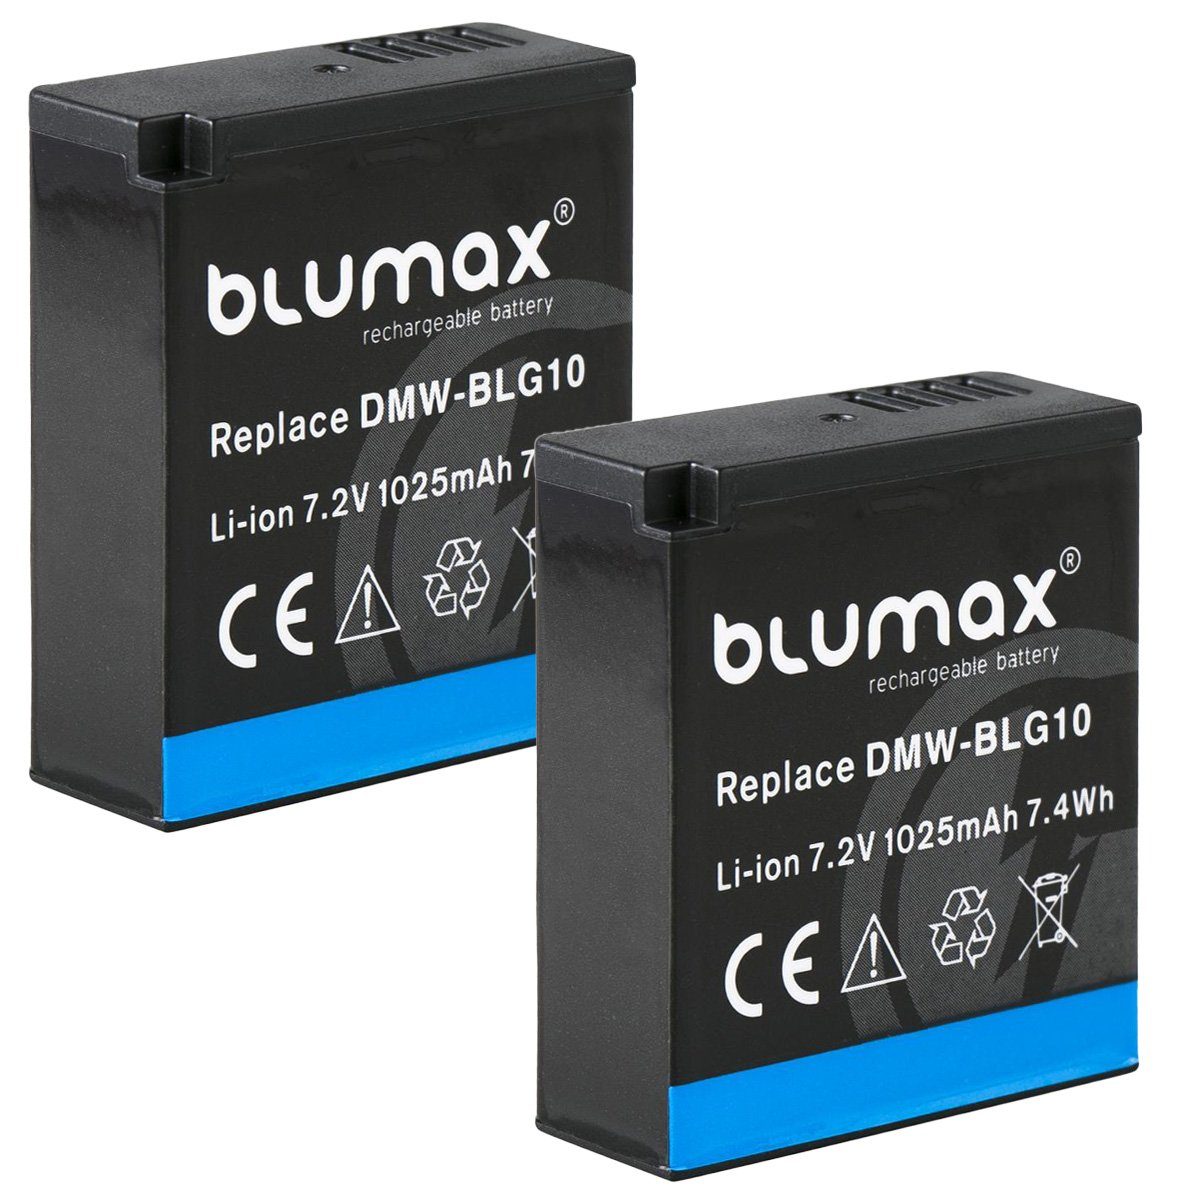 Blumax 2x DMW-BLG10 DMW-BLG10E DC-GX9 DMC-GX7 1025 mAh Kamera-Akku